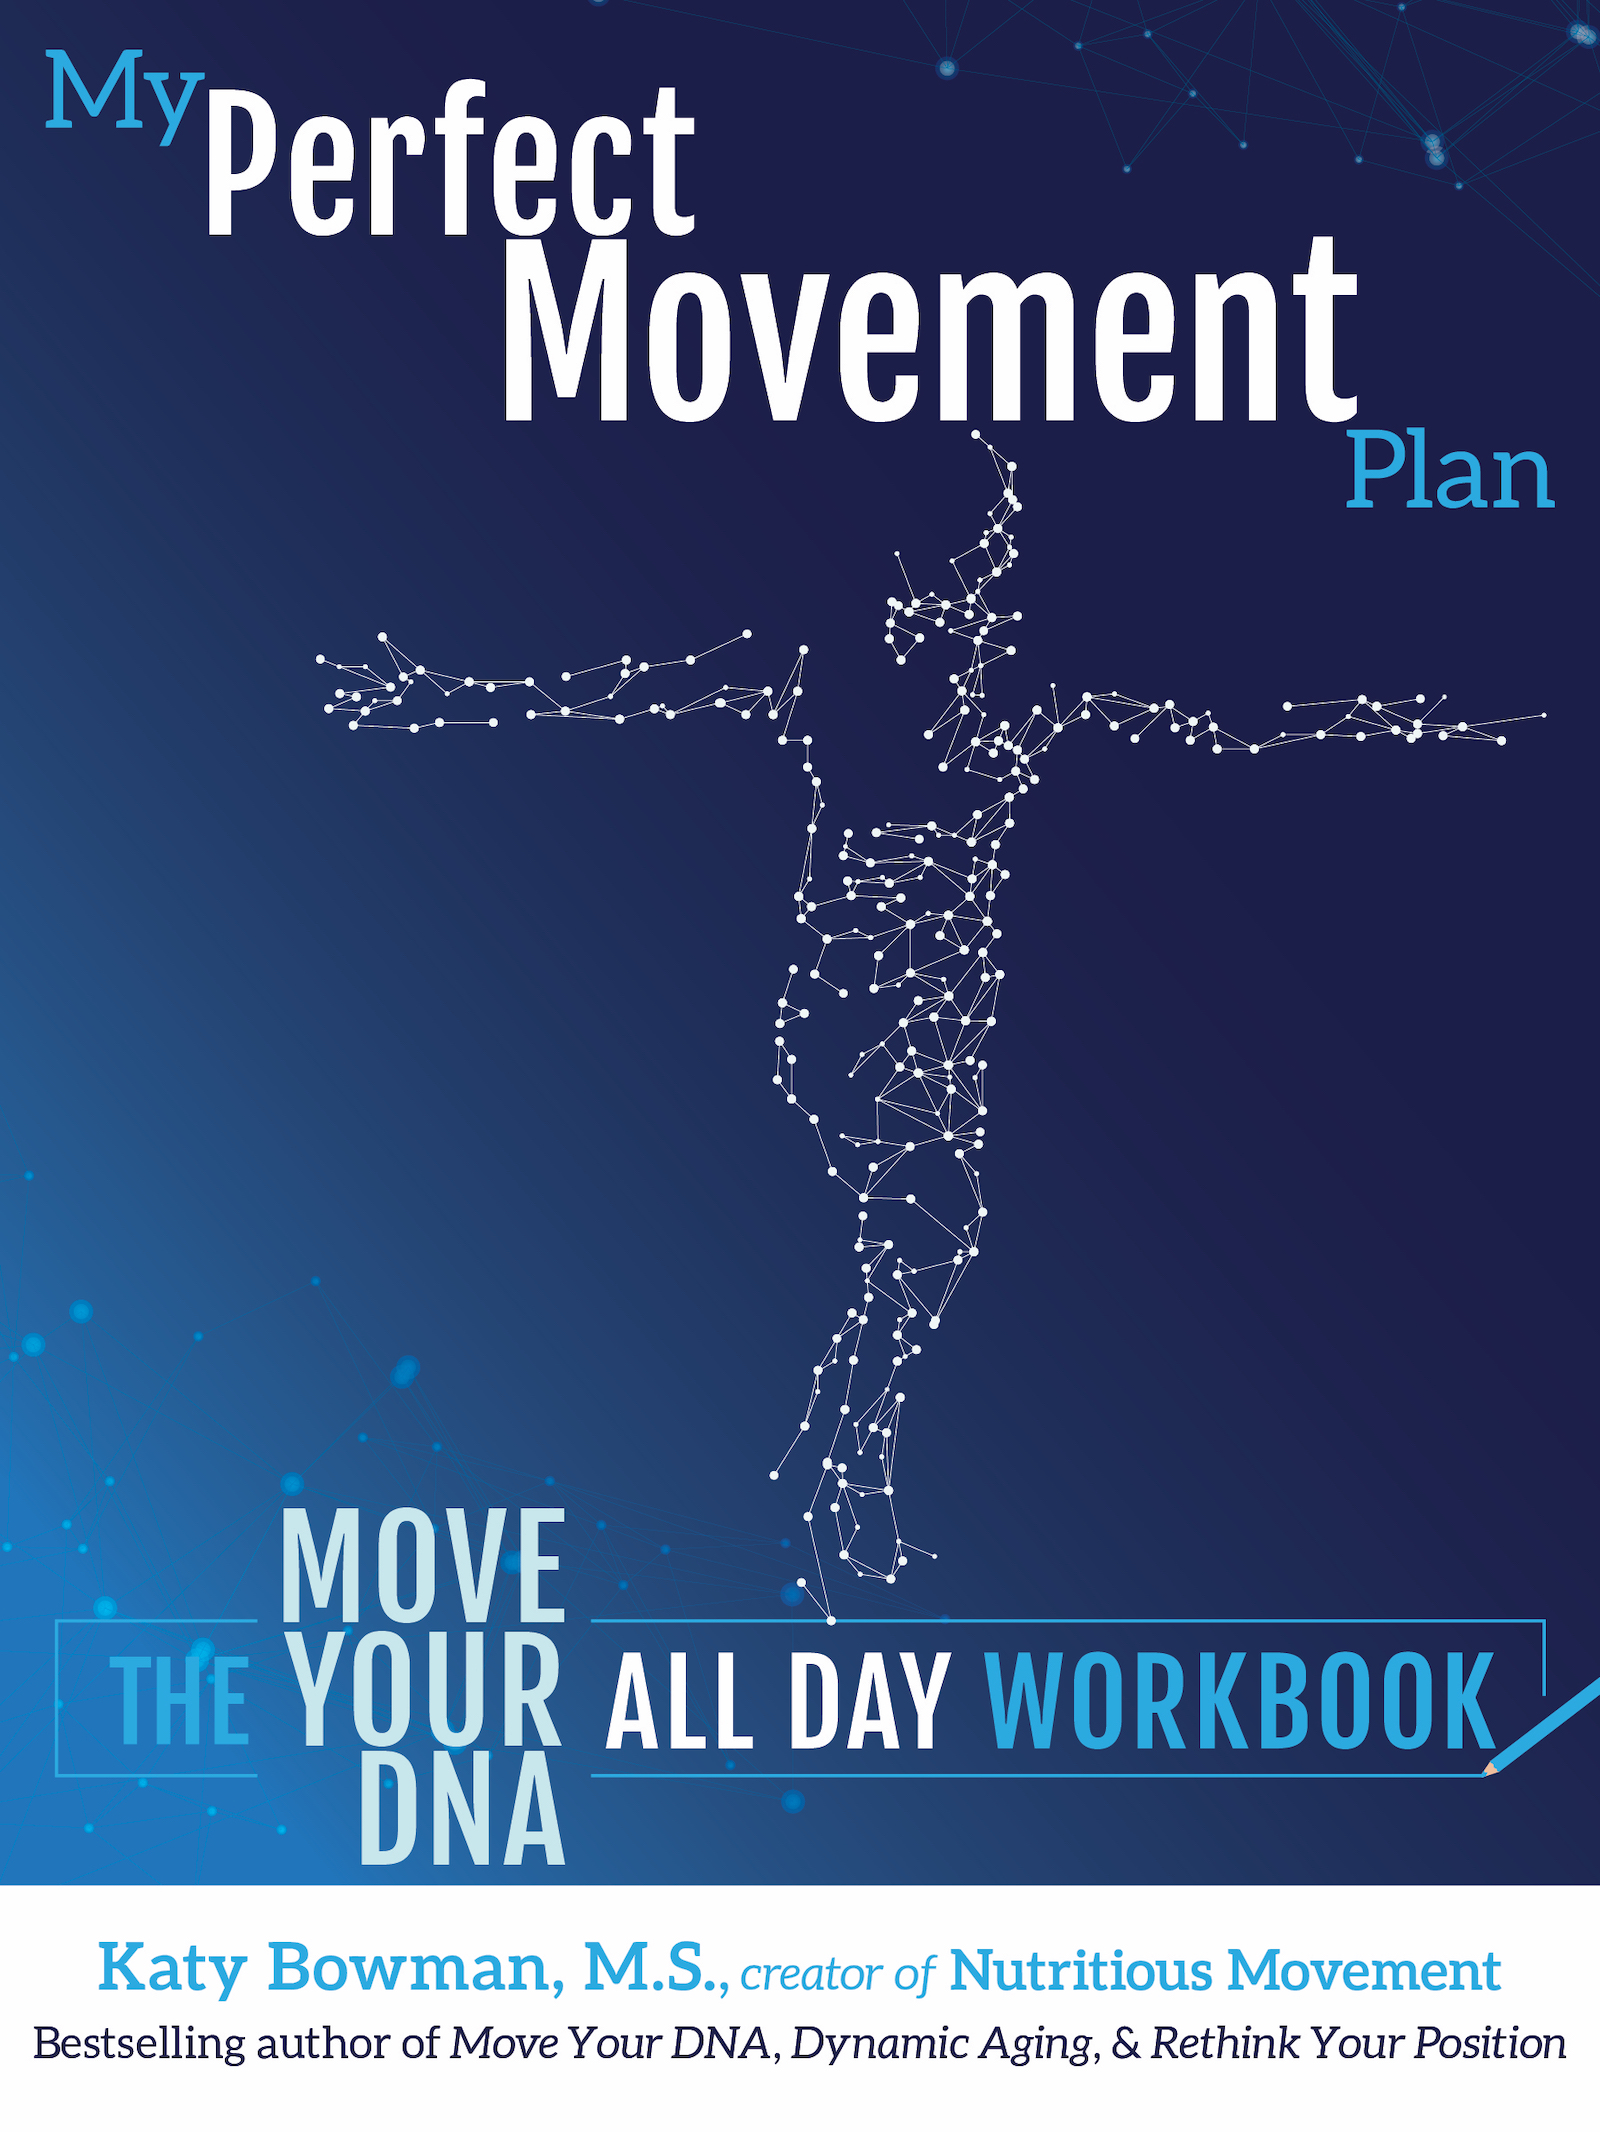 My Perfect Movement Plan by Katy Bowman